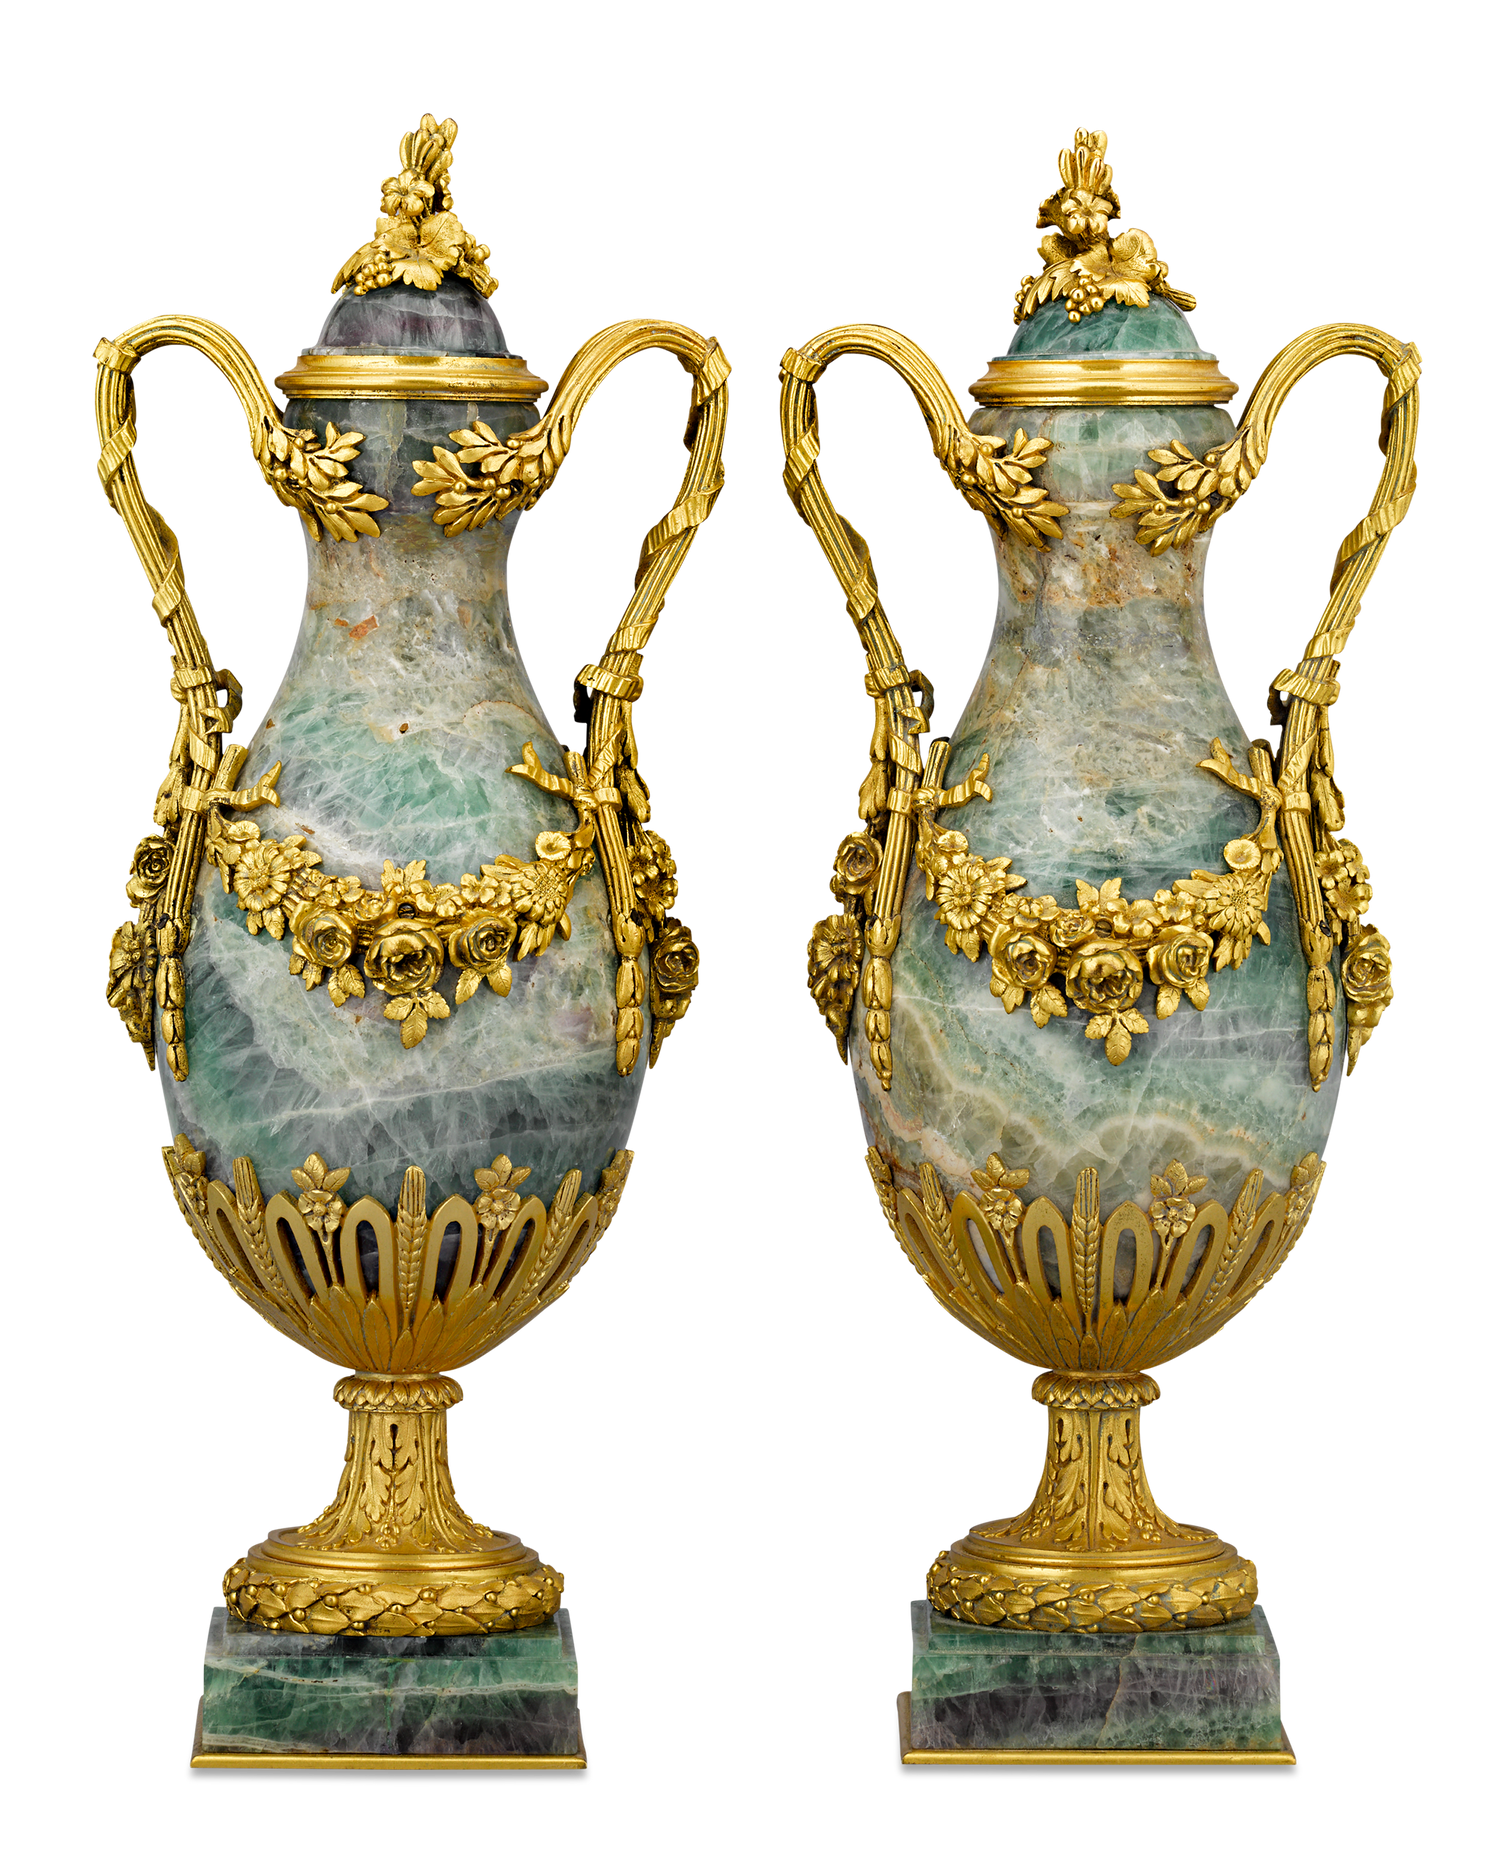 Pair of Ormolu-Mounted Fluorspar Vases